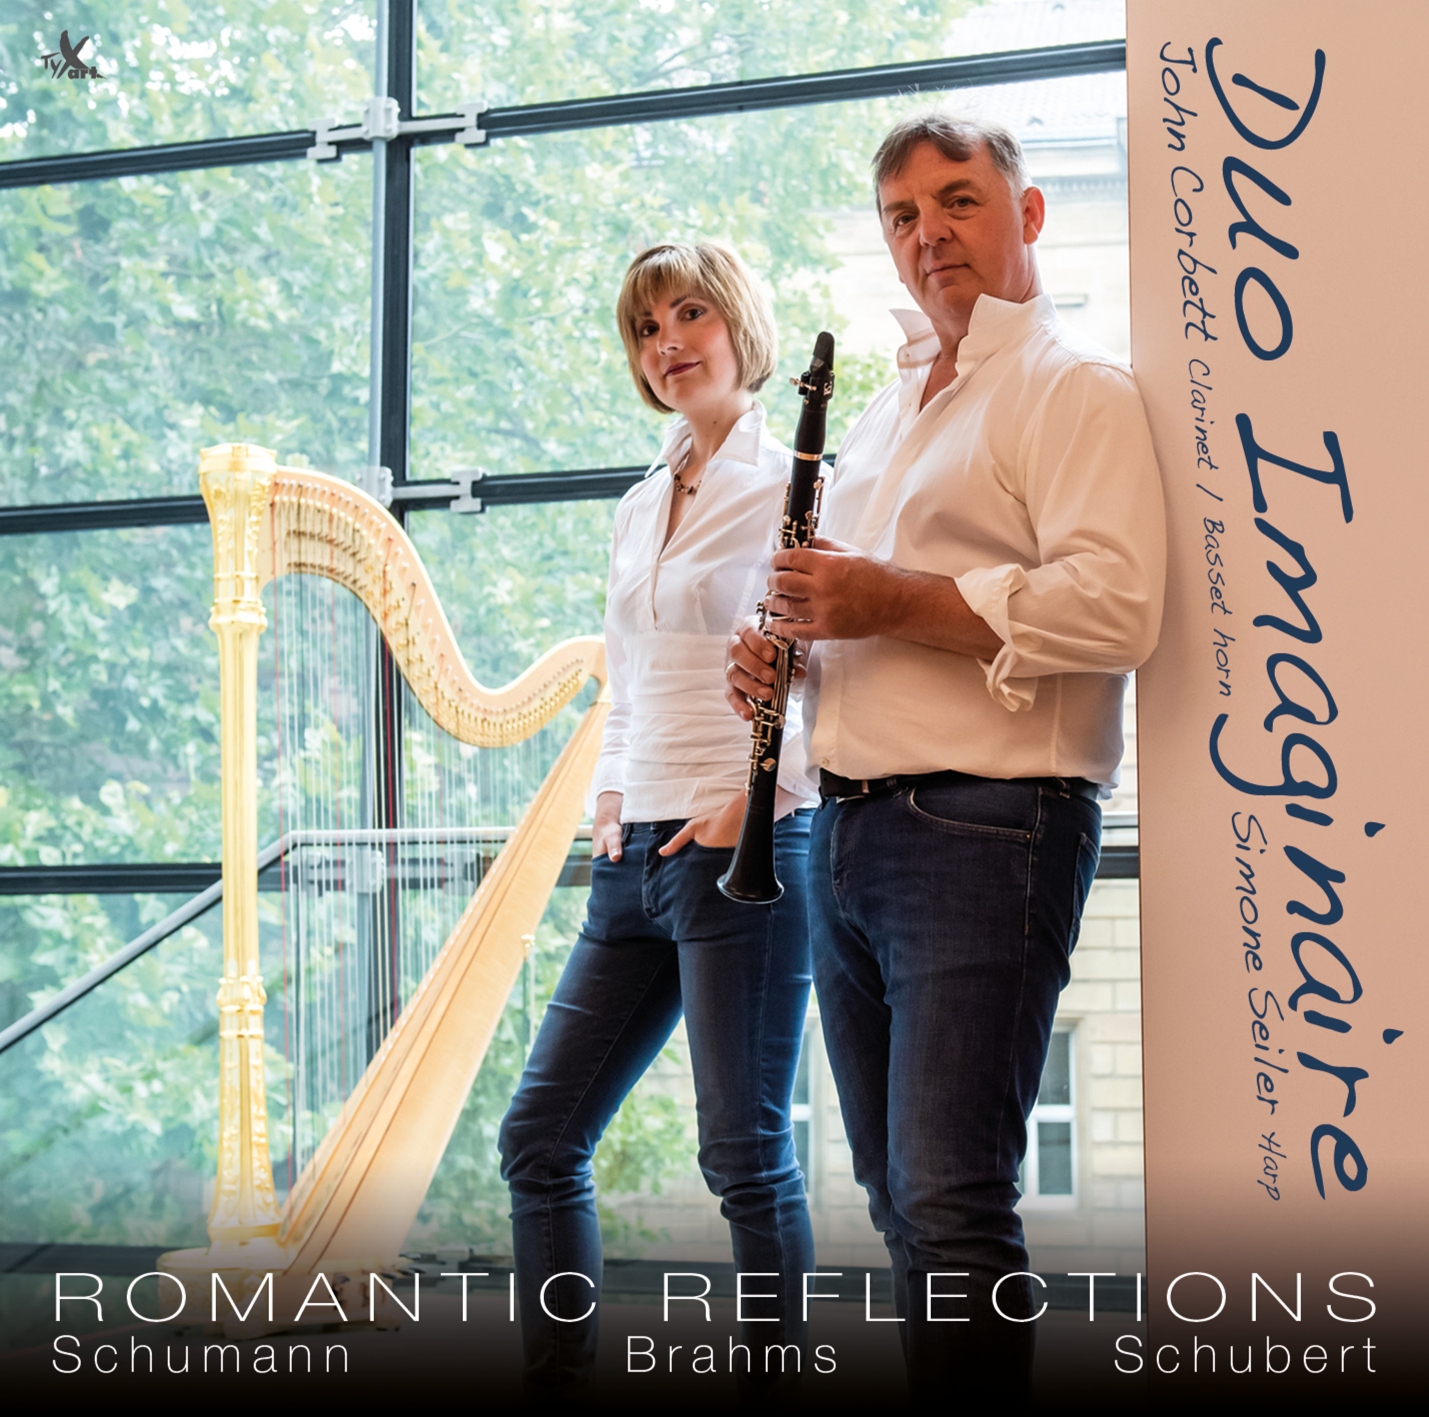 Romantic Reflections – Schumann Brahms Schubert - Duo Imaginaire